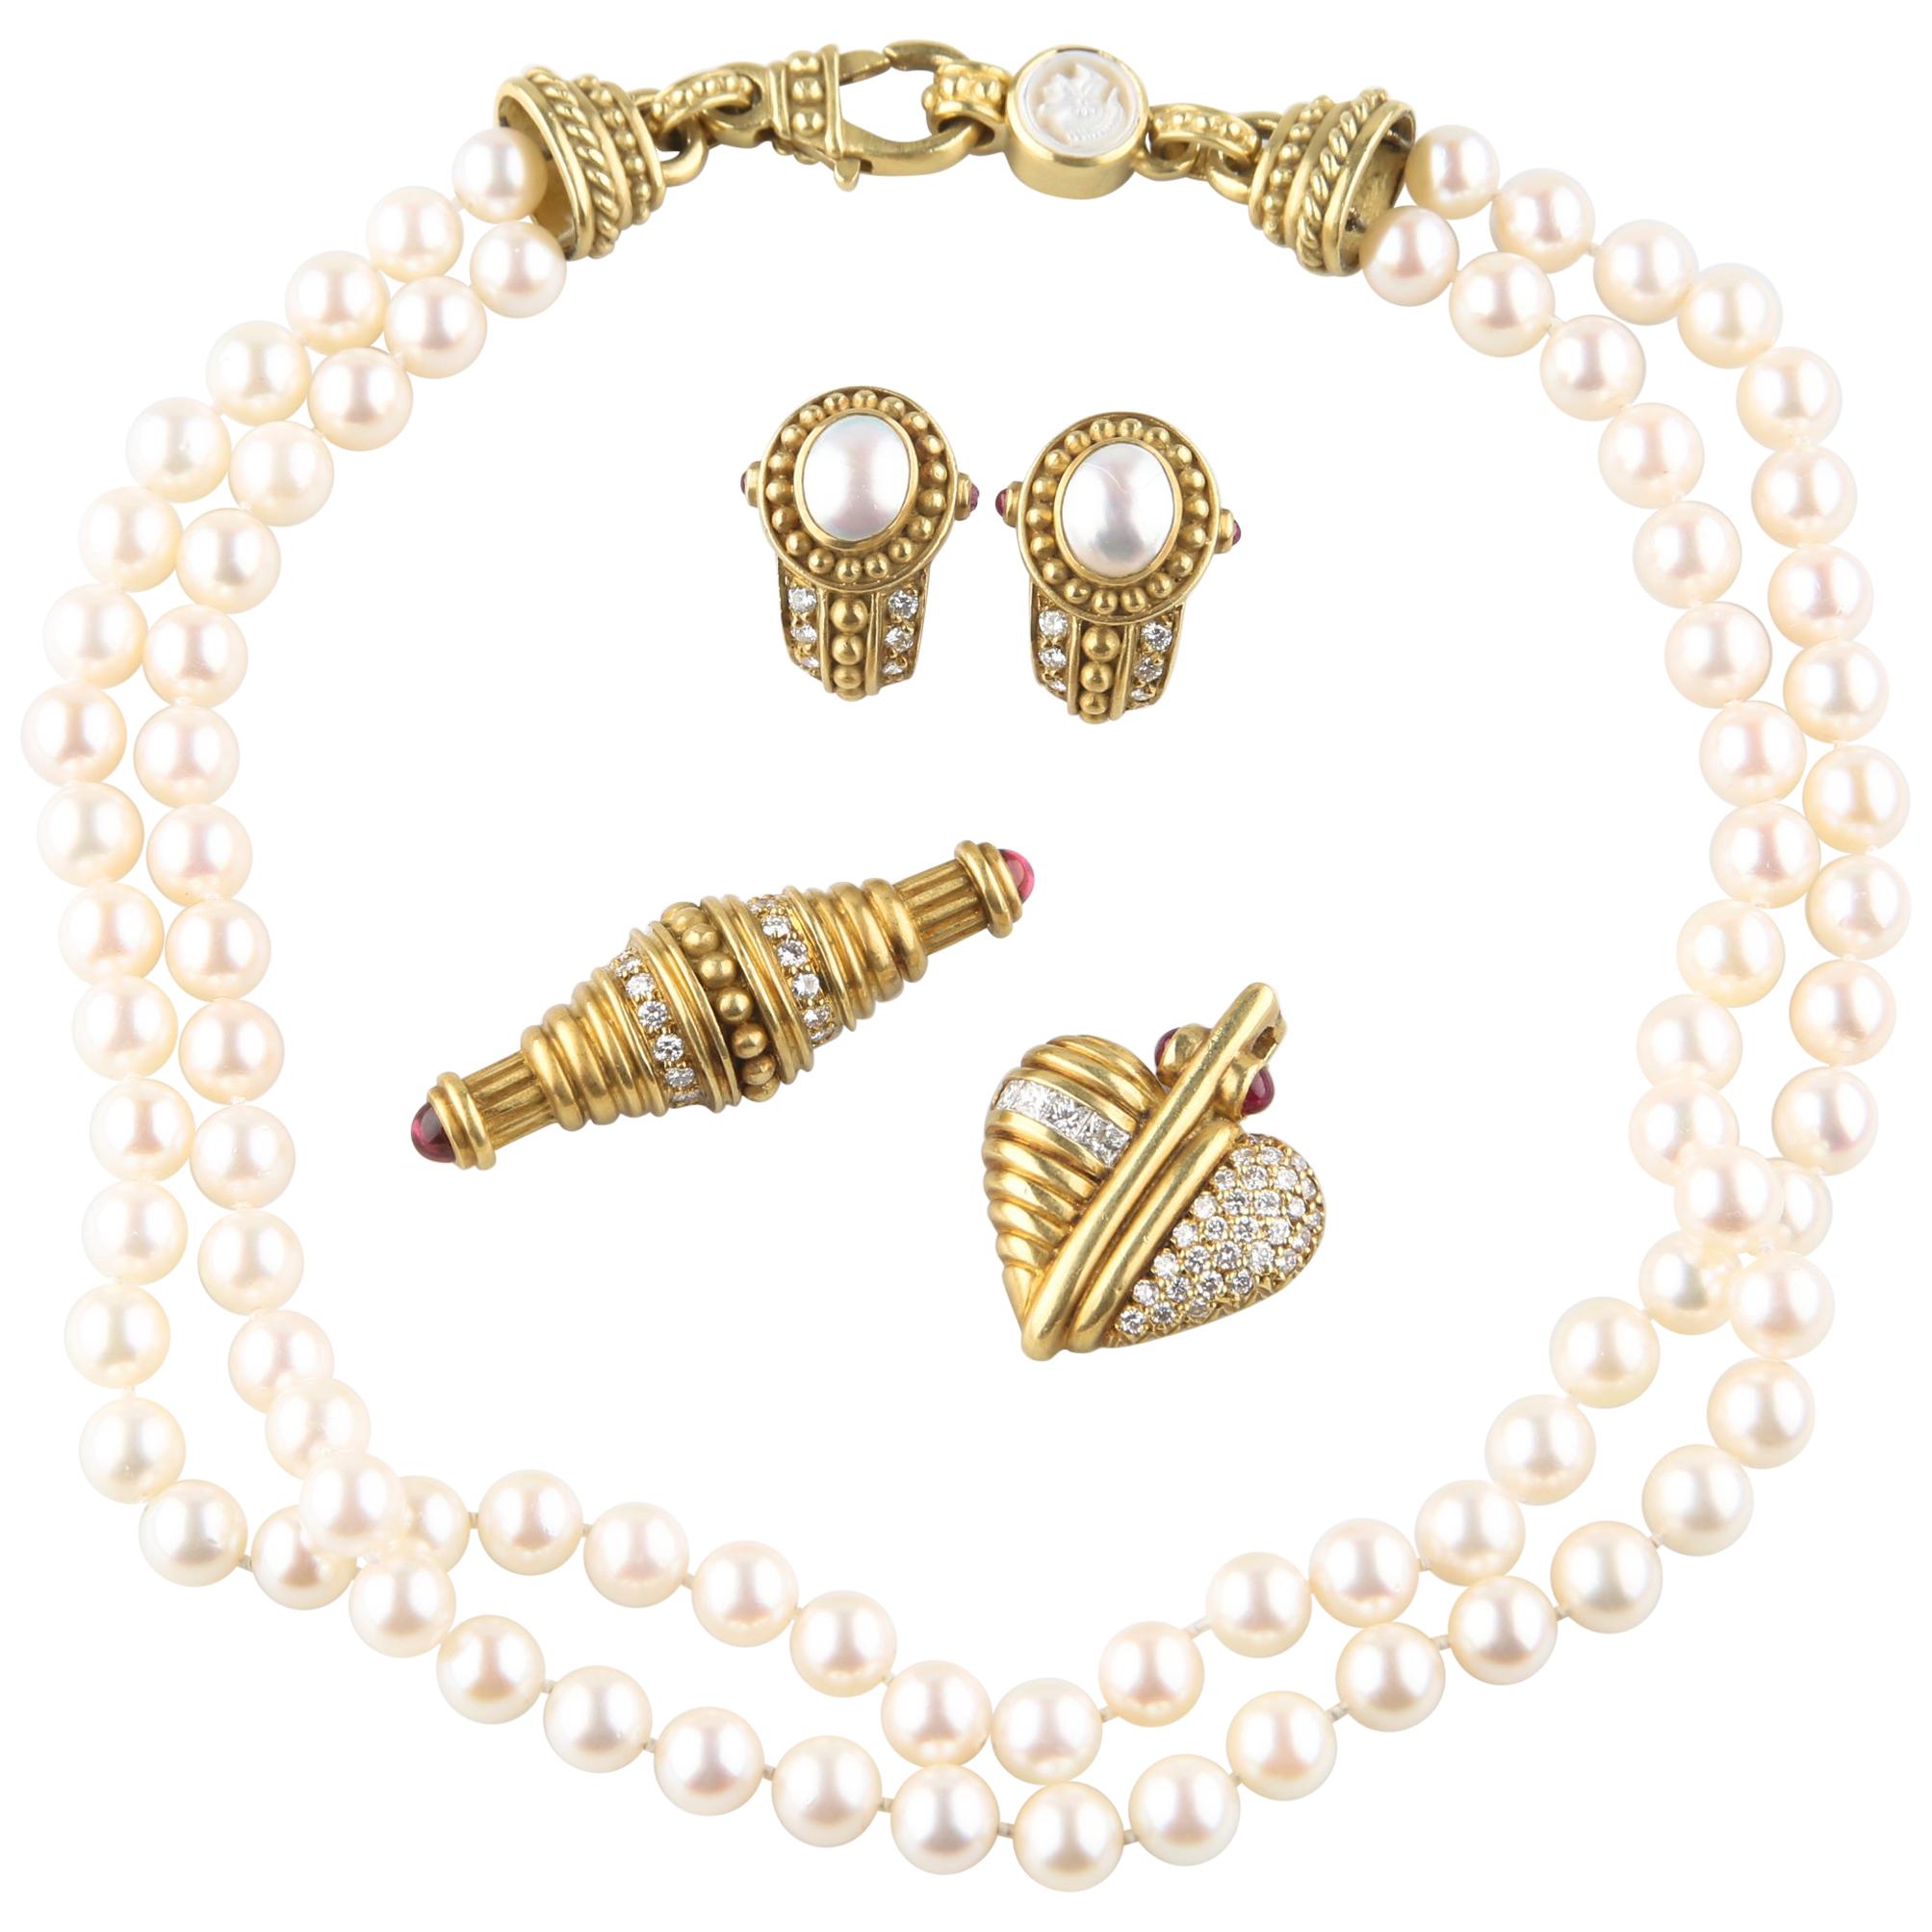 Judith Ripka, collier, boucles d'oreilles, pendentif et broche en or 18 carats serti de diamants et de perles